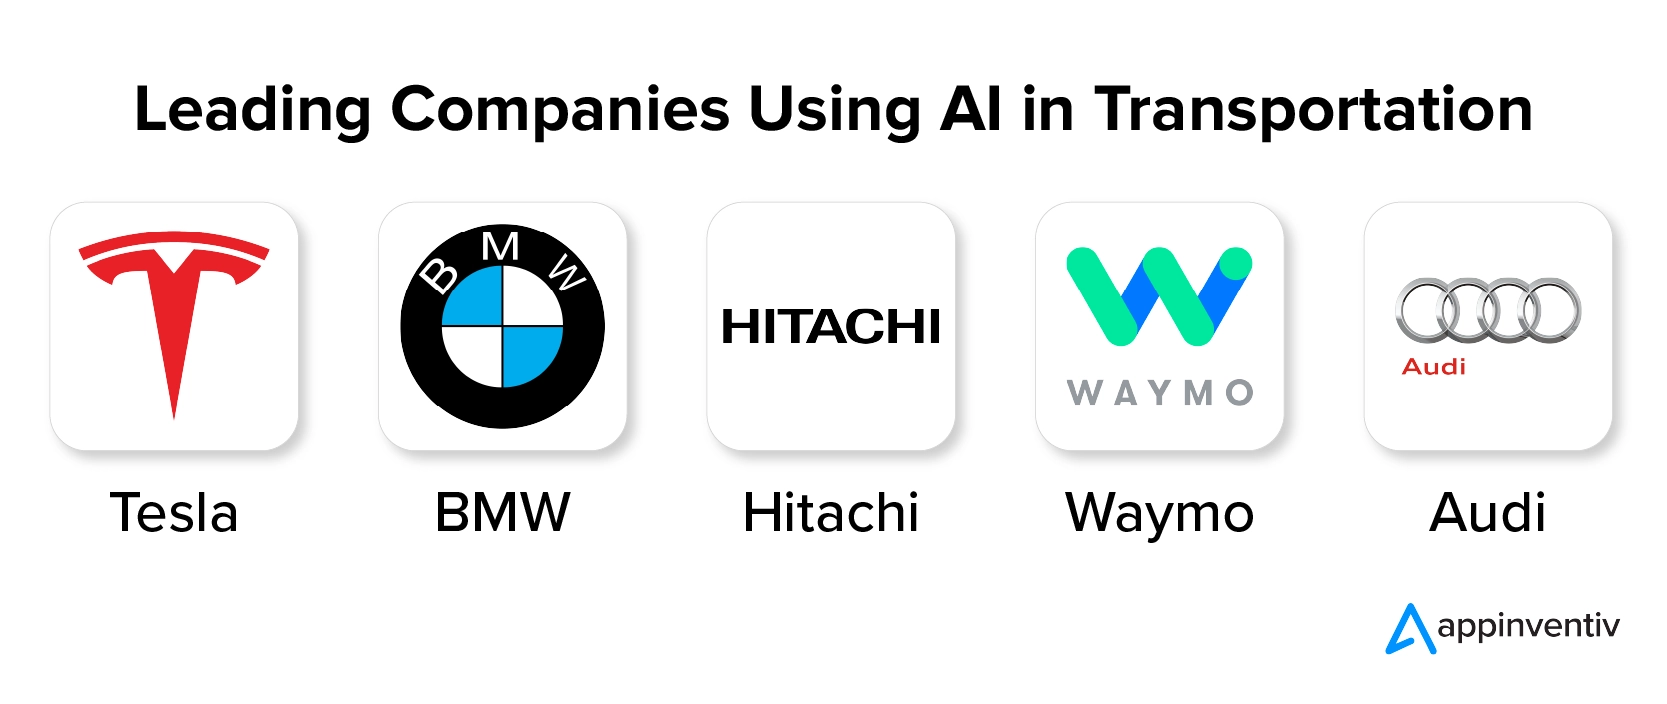 Leading companies using AI in transportation